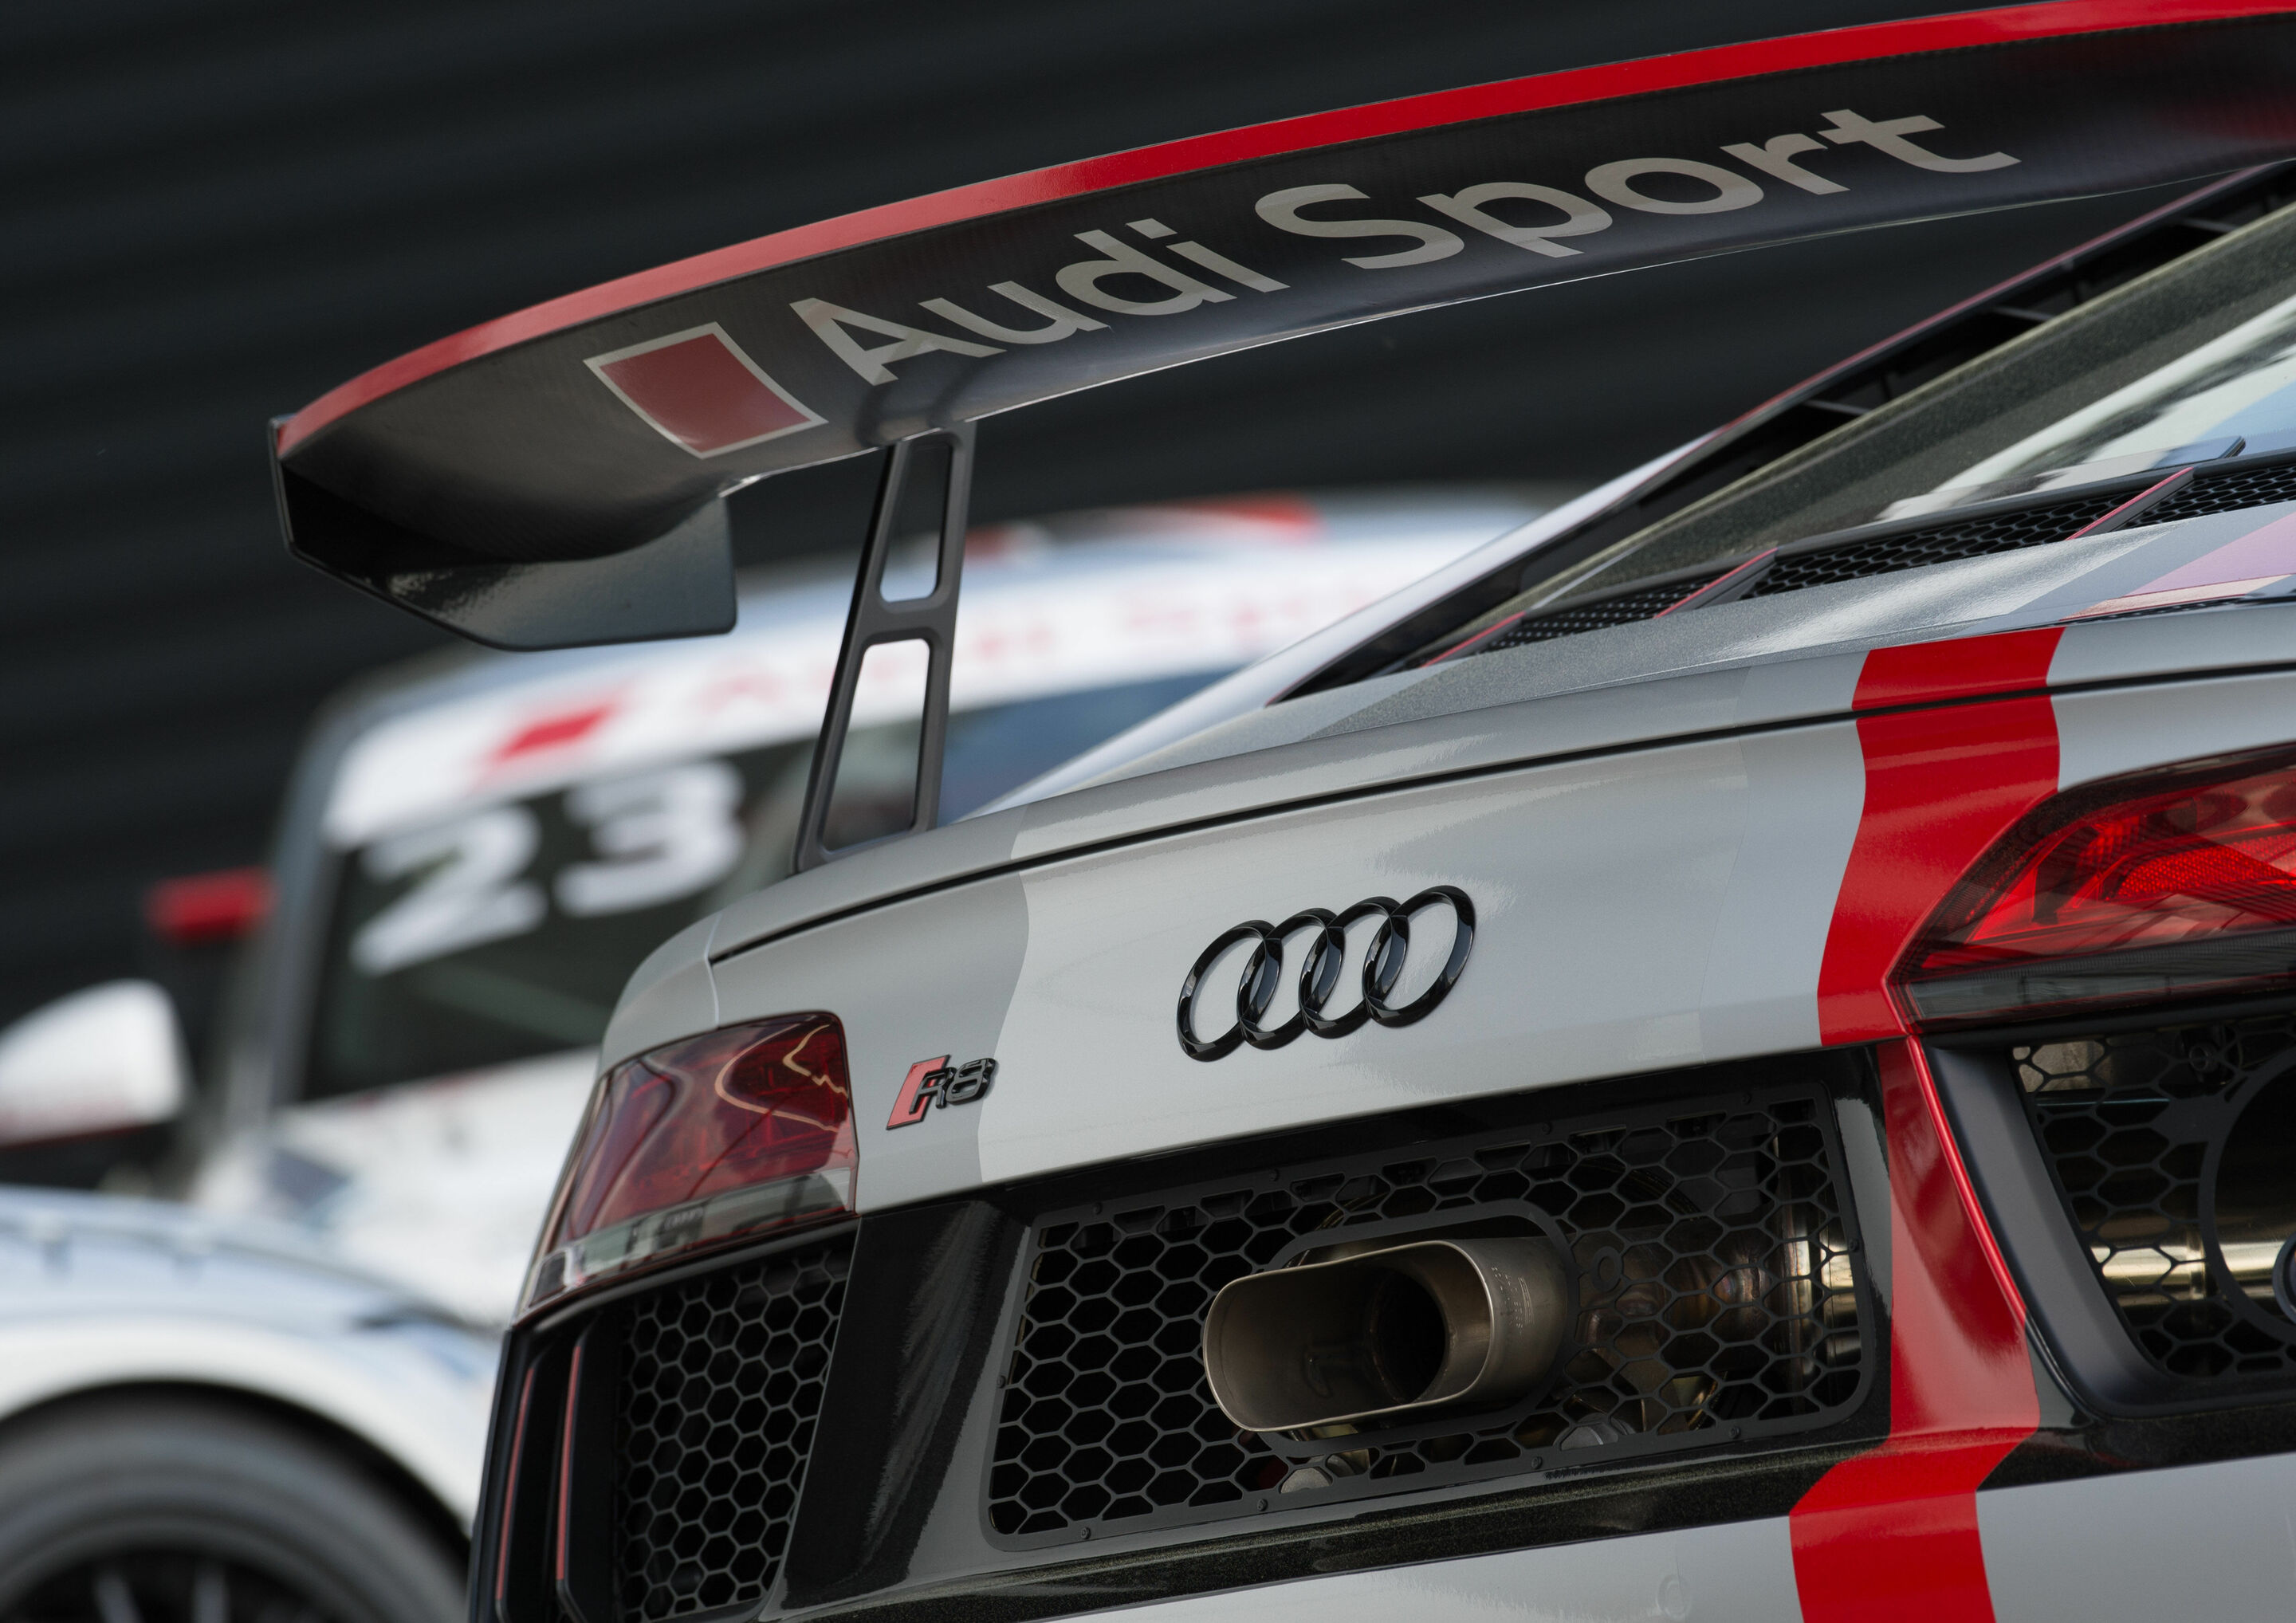 Ten years of Audi Sport customer racing